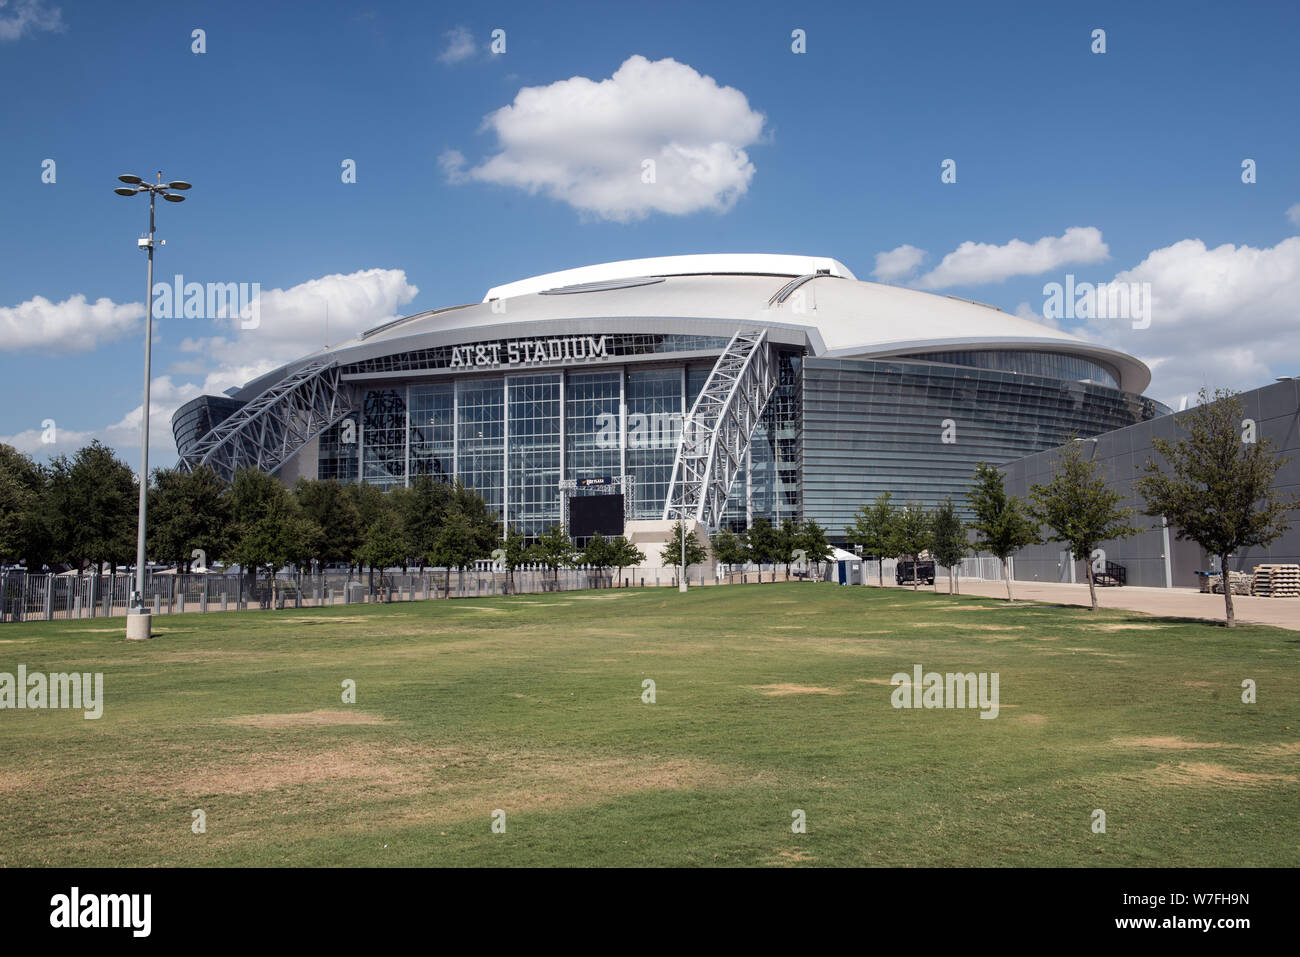 AT&T Stadium, home of the Dallas Cowboys National Football League team in Arlington, Texas Stock Photo